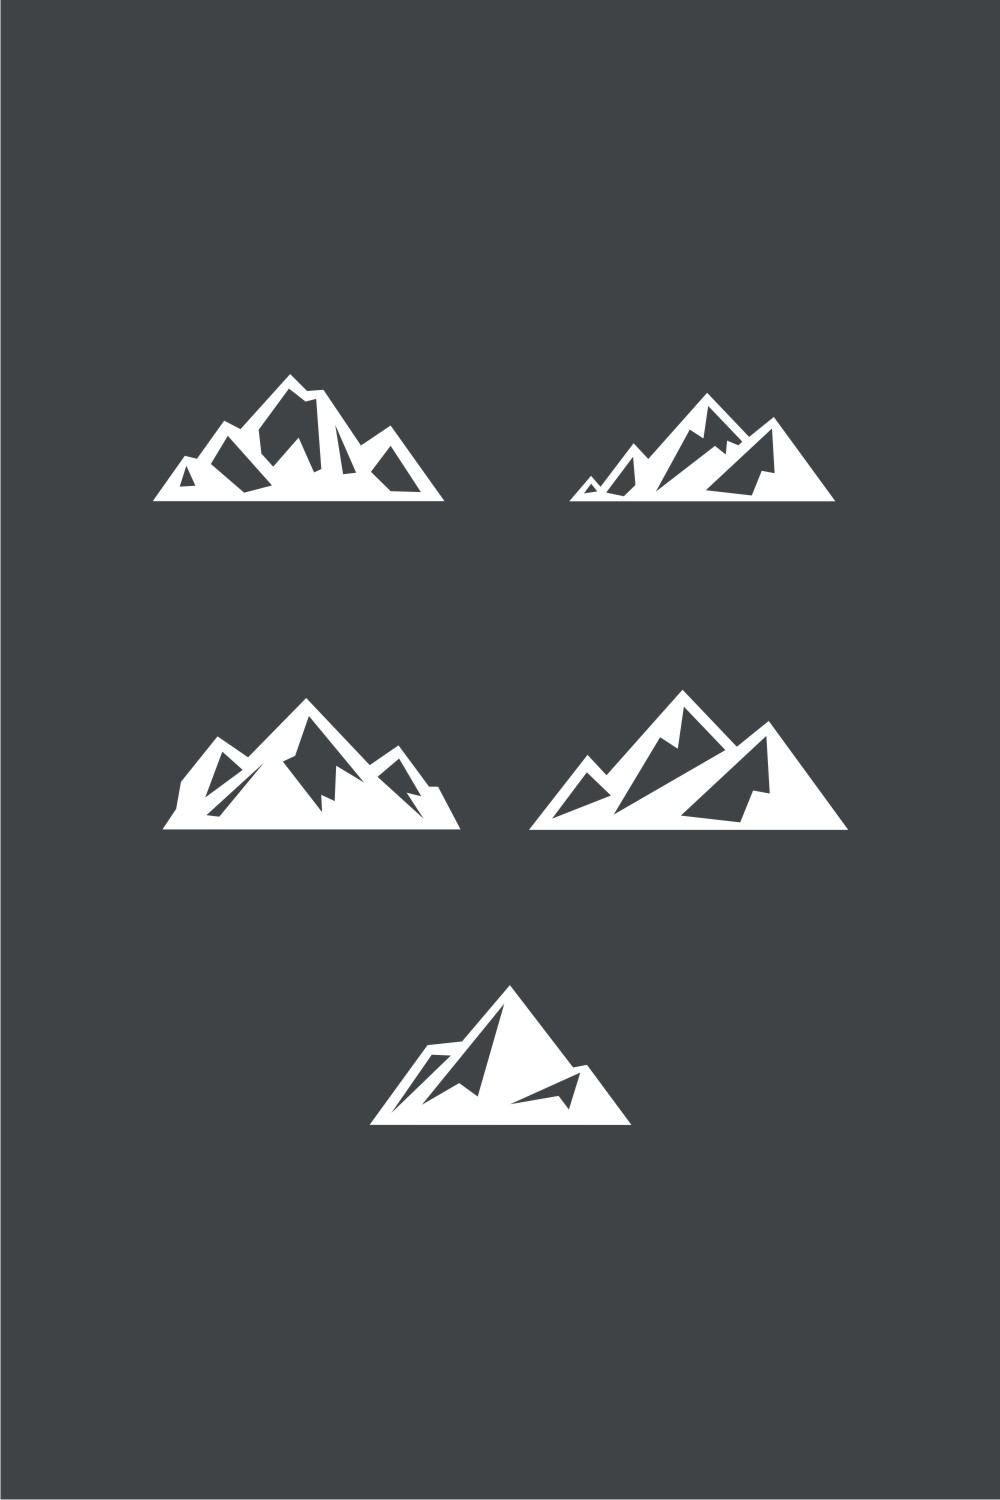 Mountain Logo Set Pinterest Image.